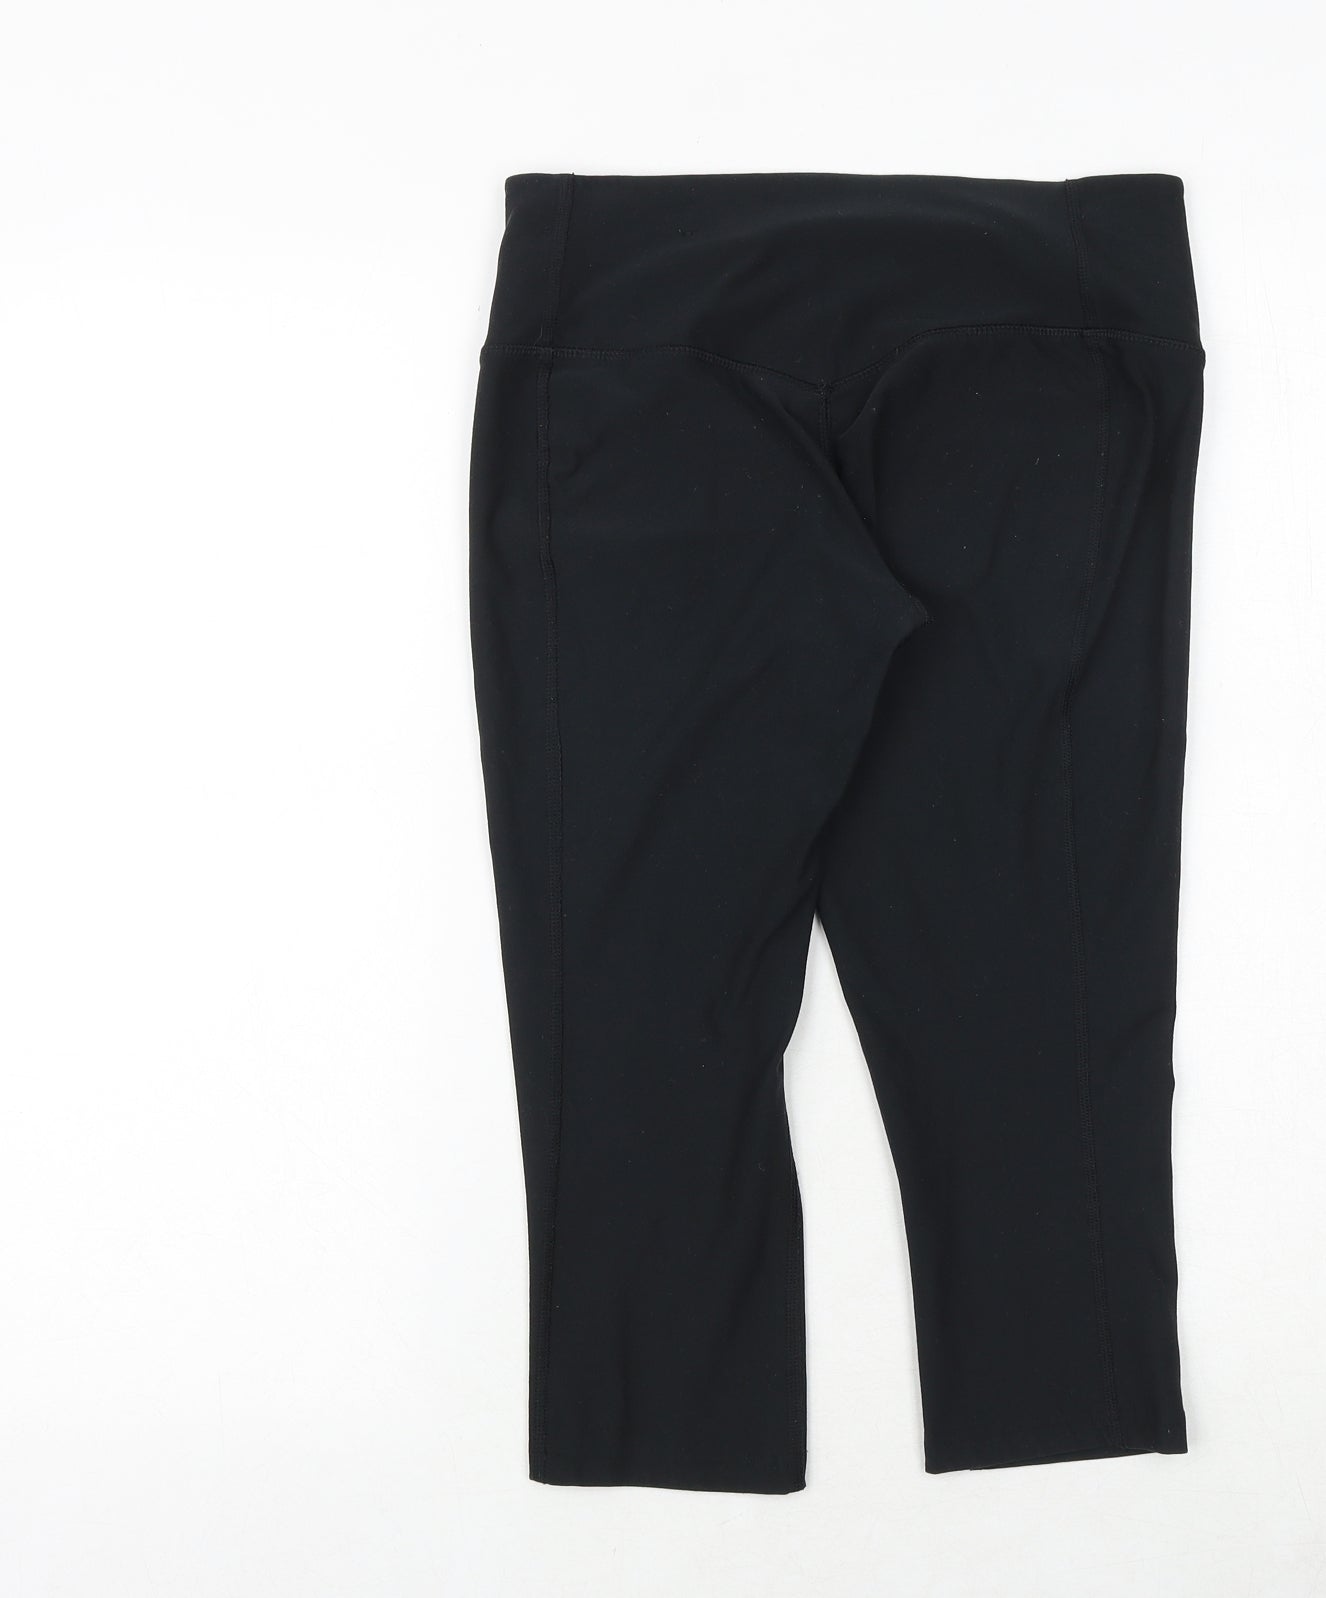 Nike Womens Black Polyester Capri Trousers Size S Regular